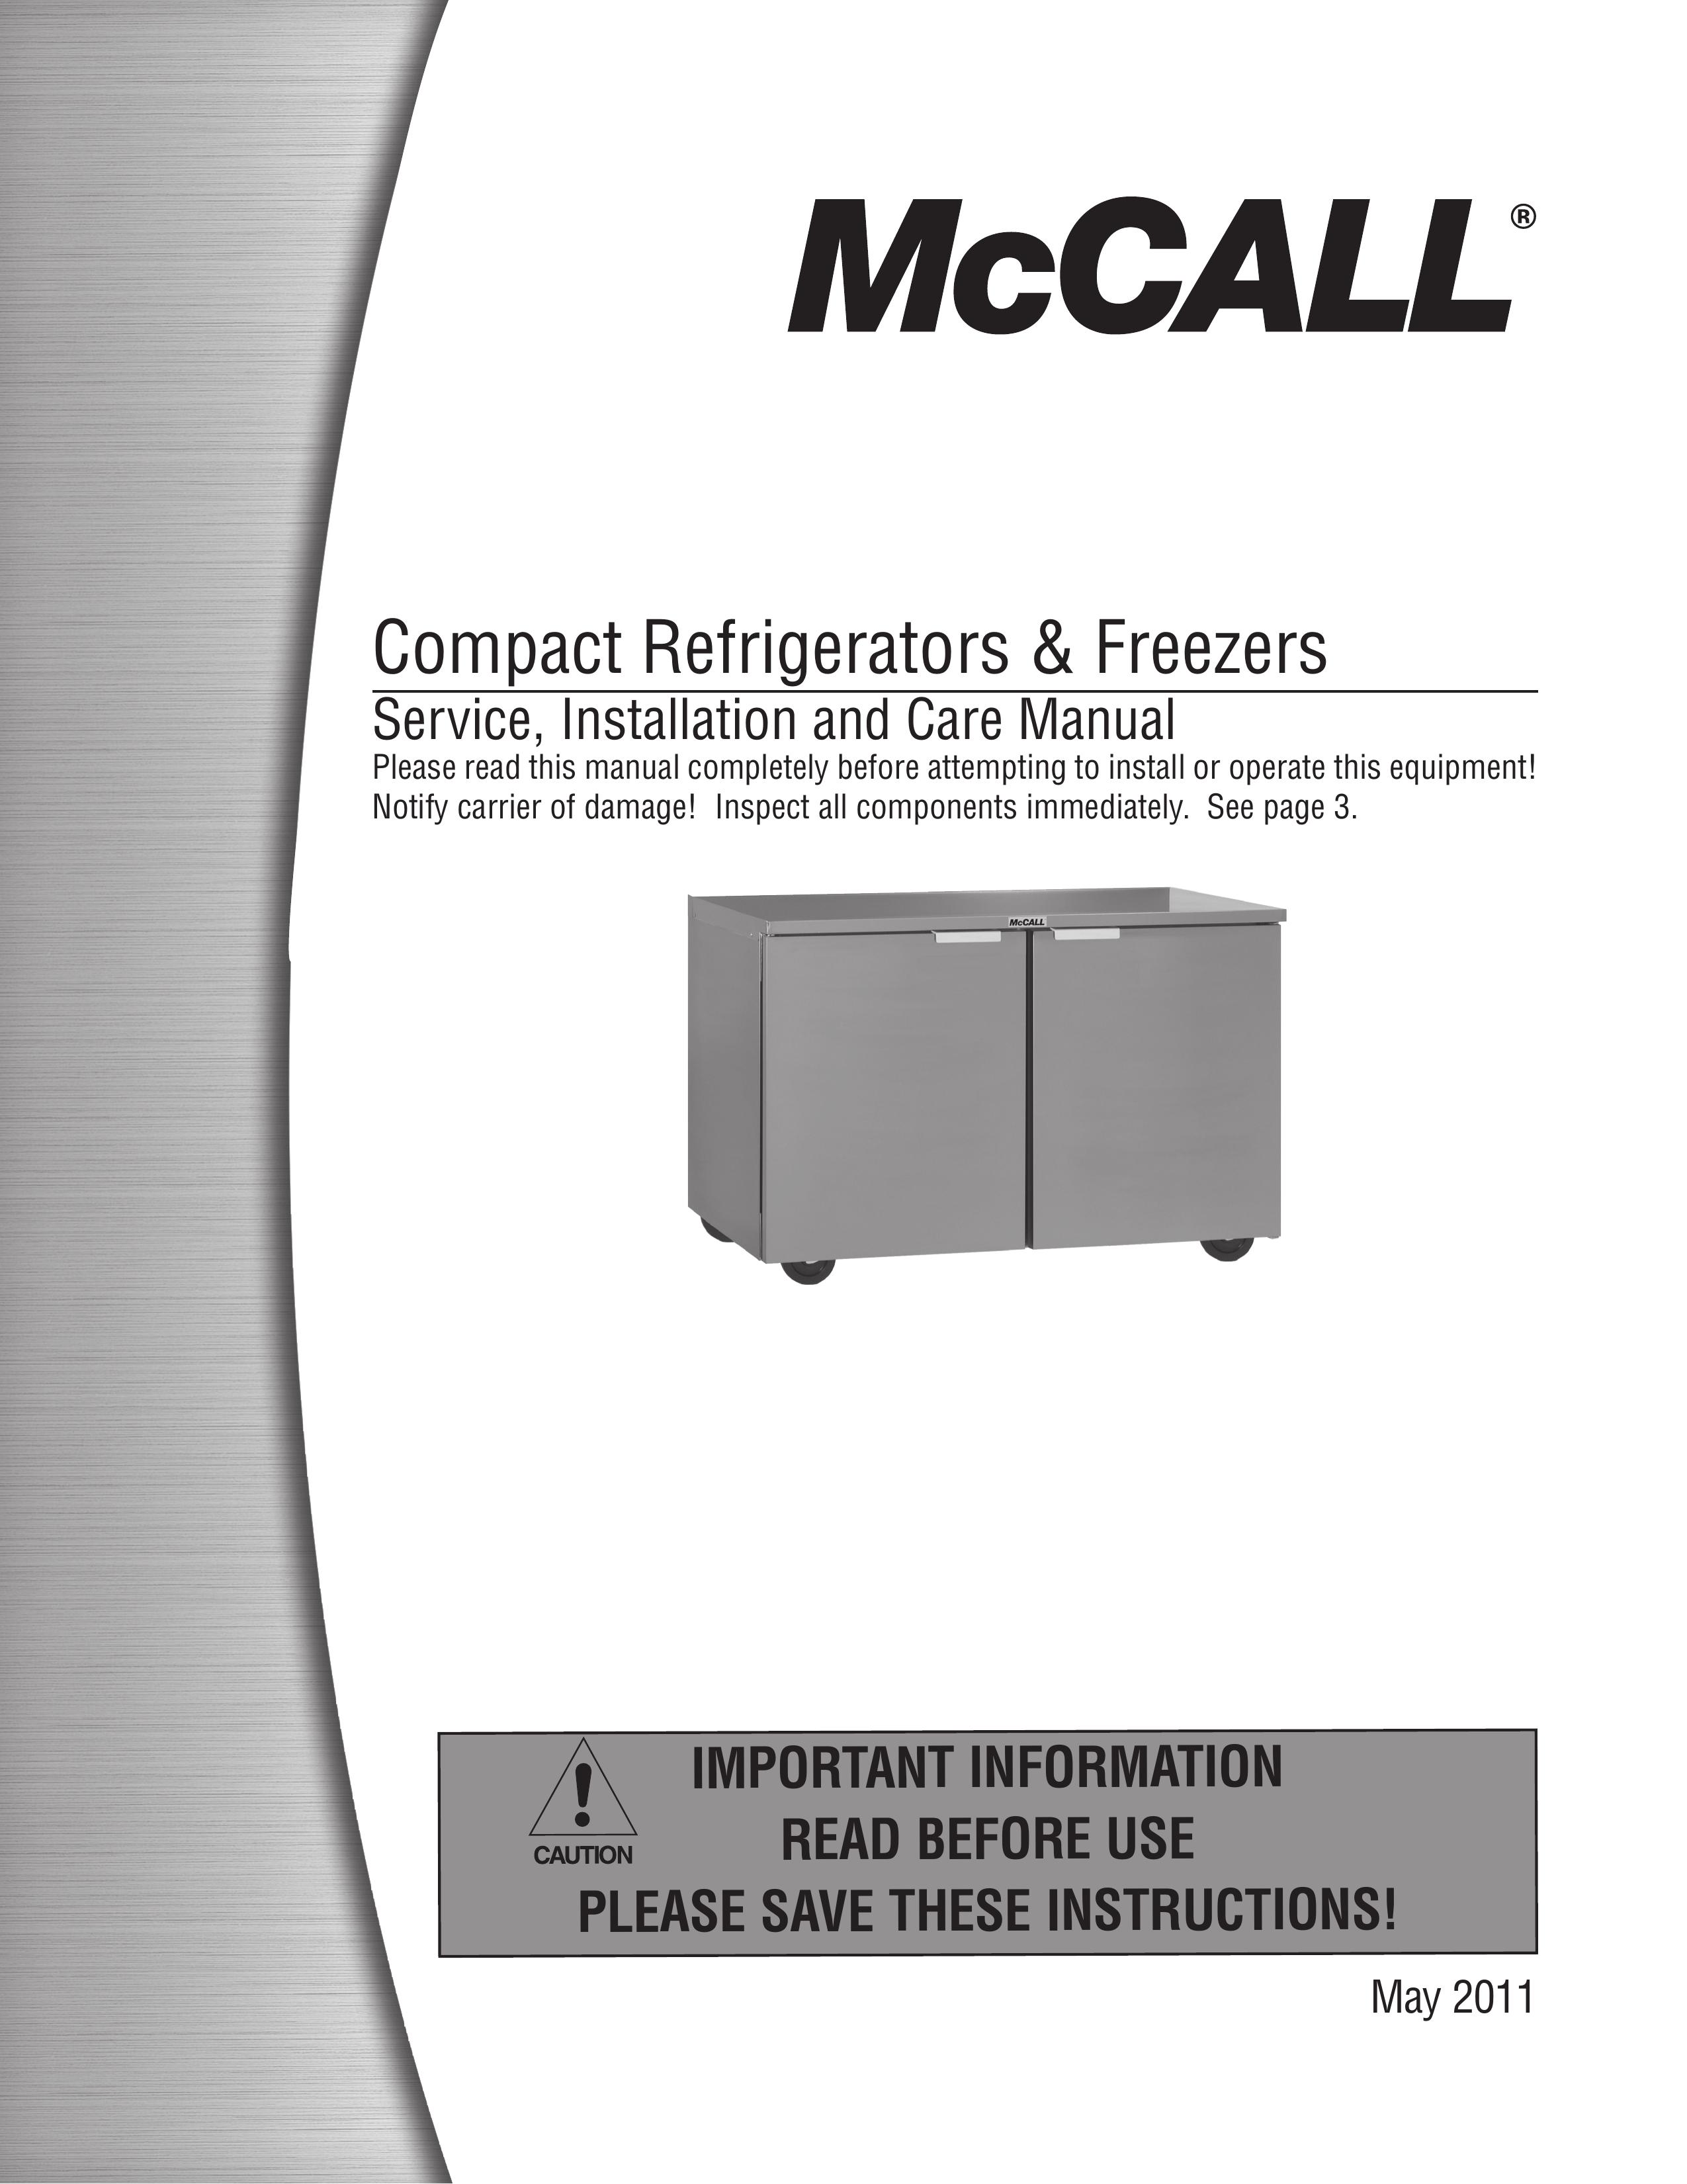 McCall Refrigeration MCCR27 Refrigerator User Manual